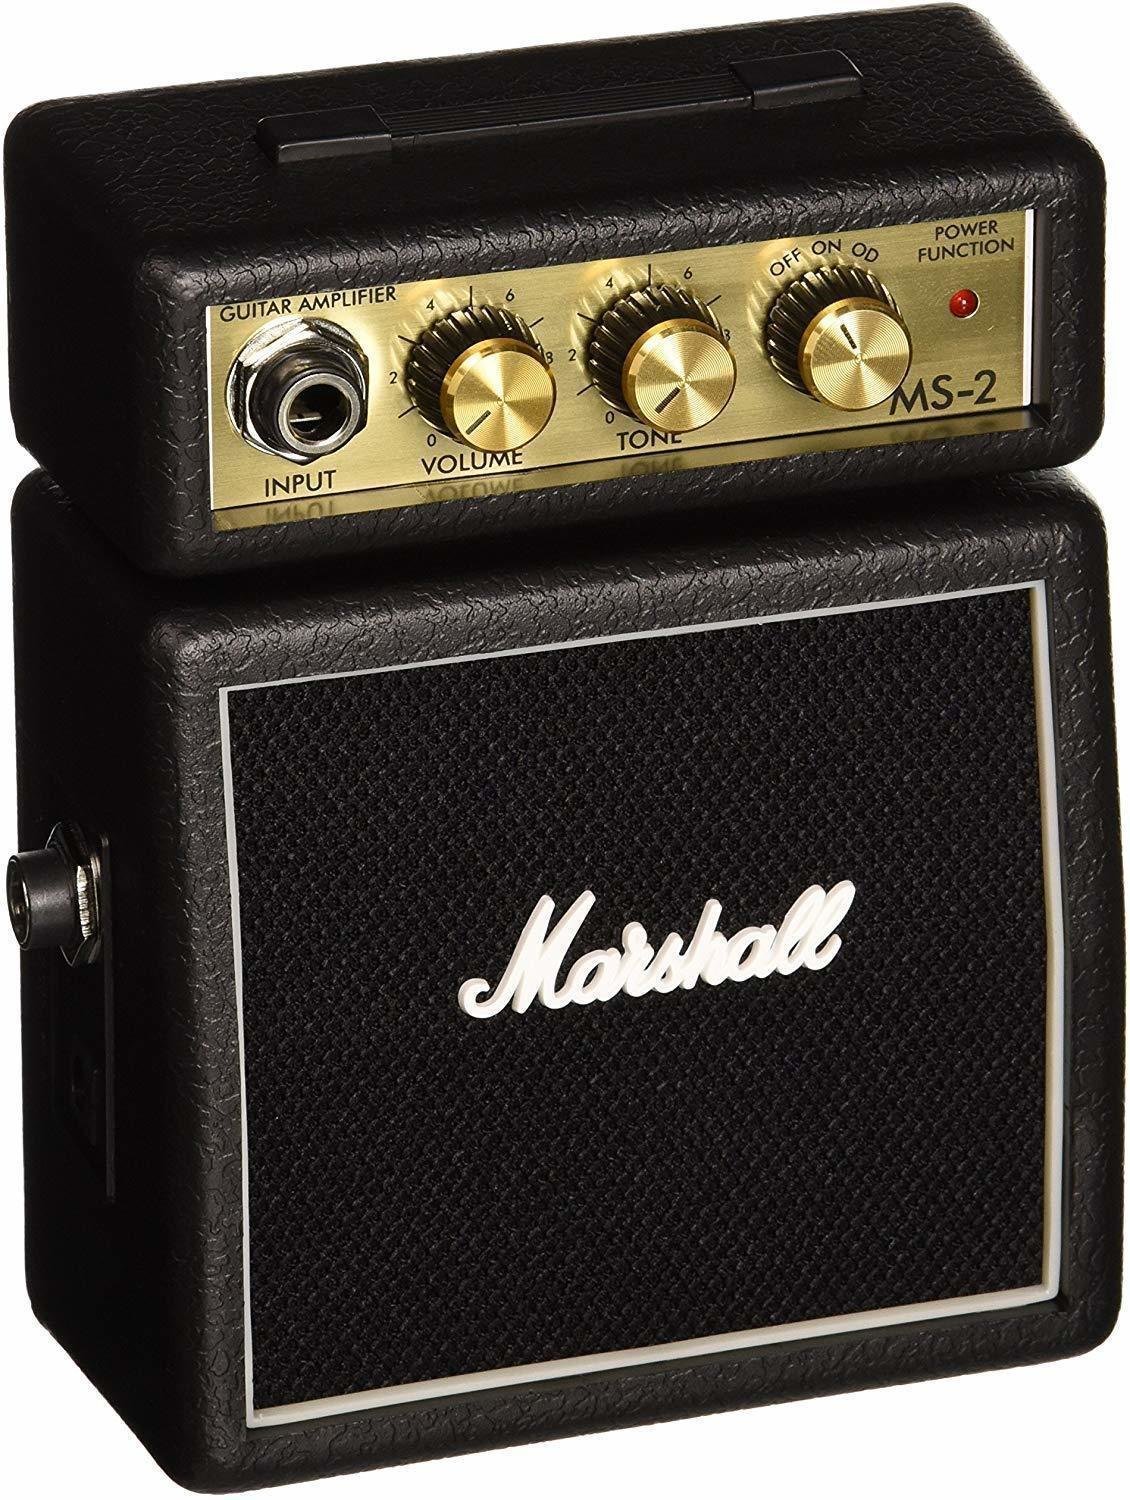 Combo mini pour guitare Marshall MS-2